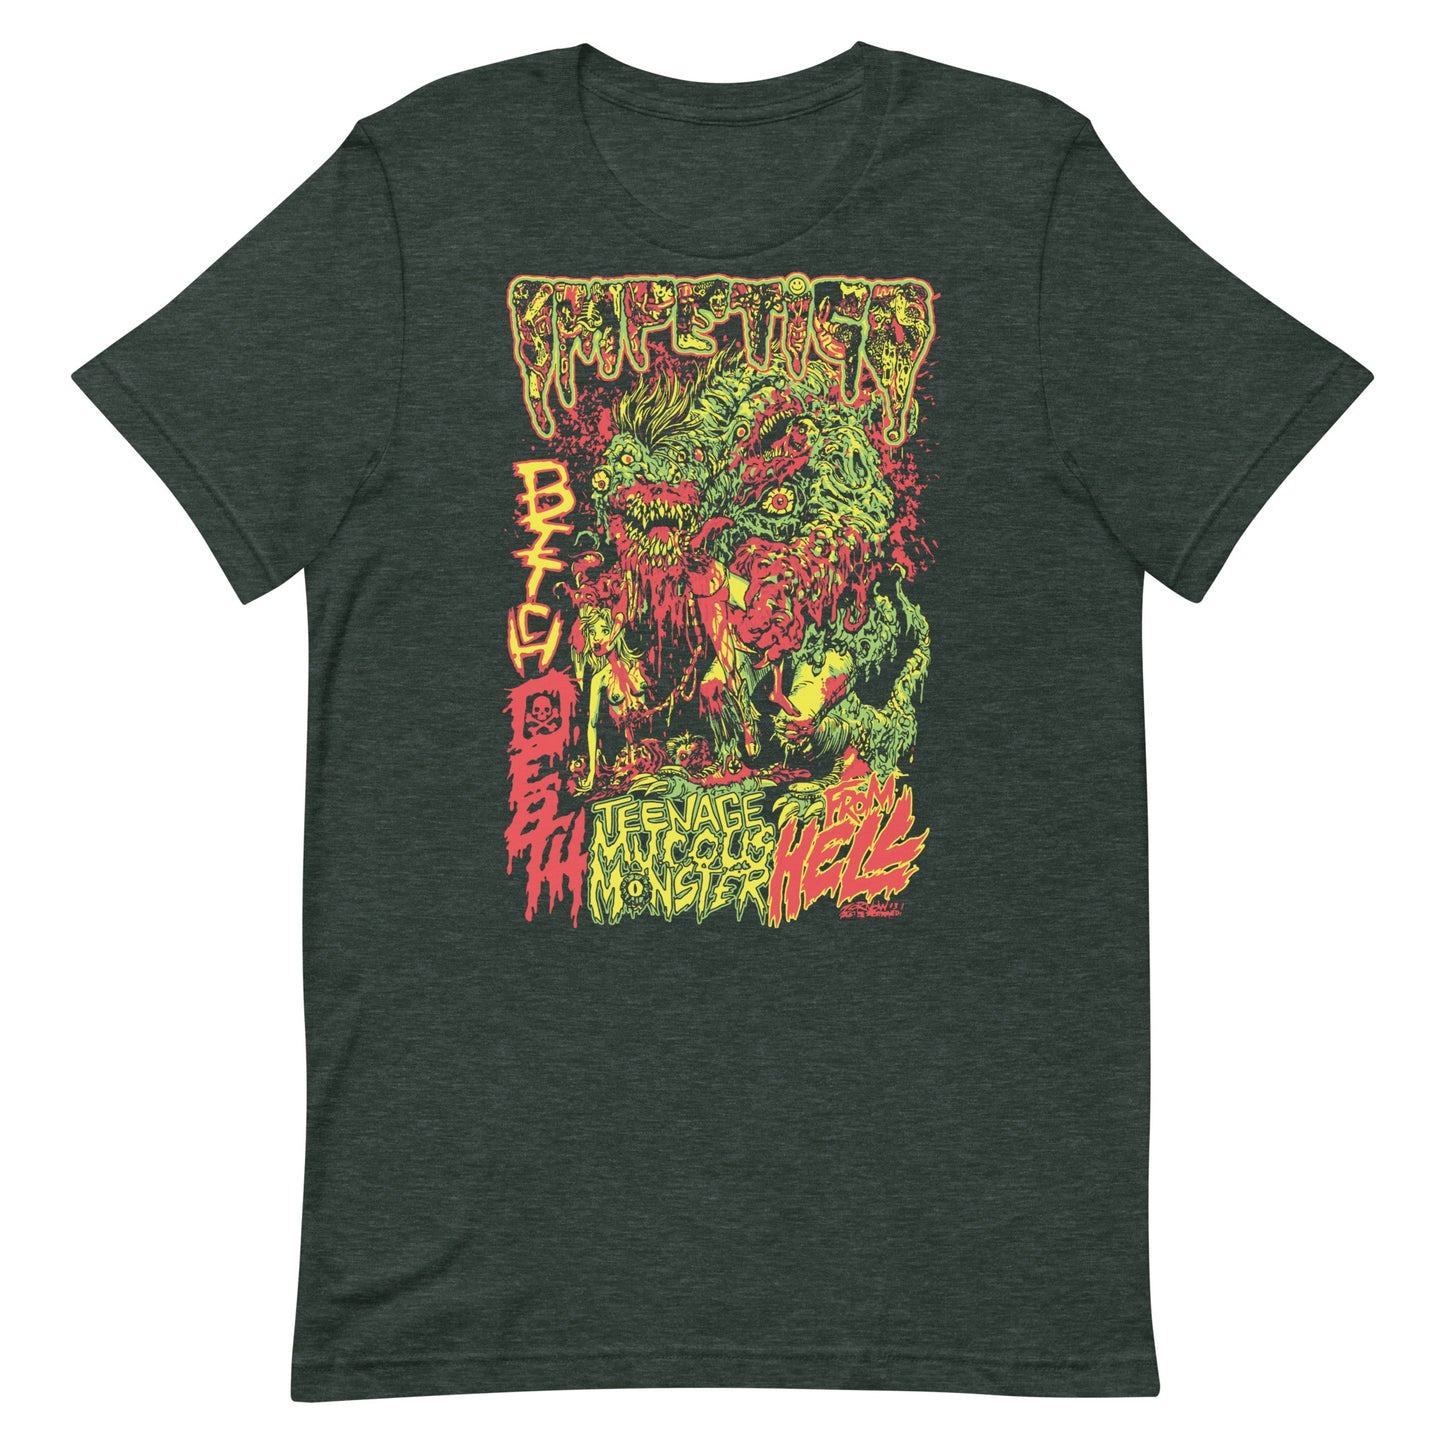 Impetigo - Teenage Mucous Monster T-Shirt